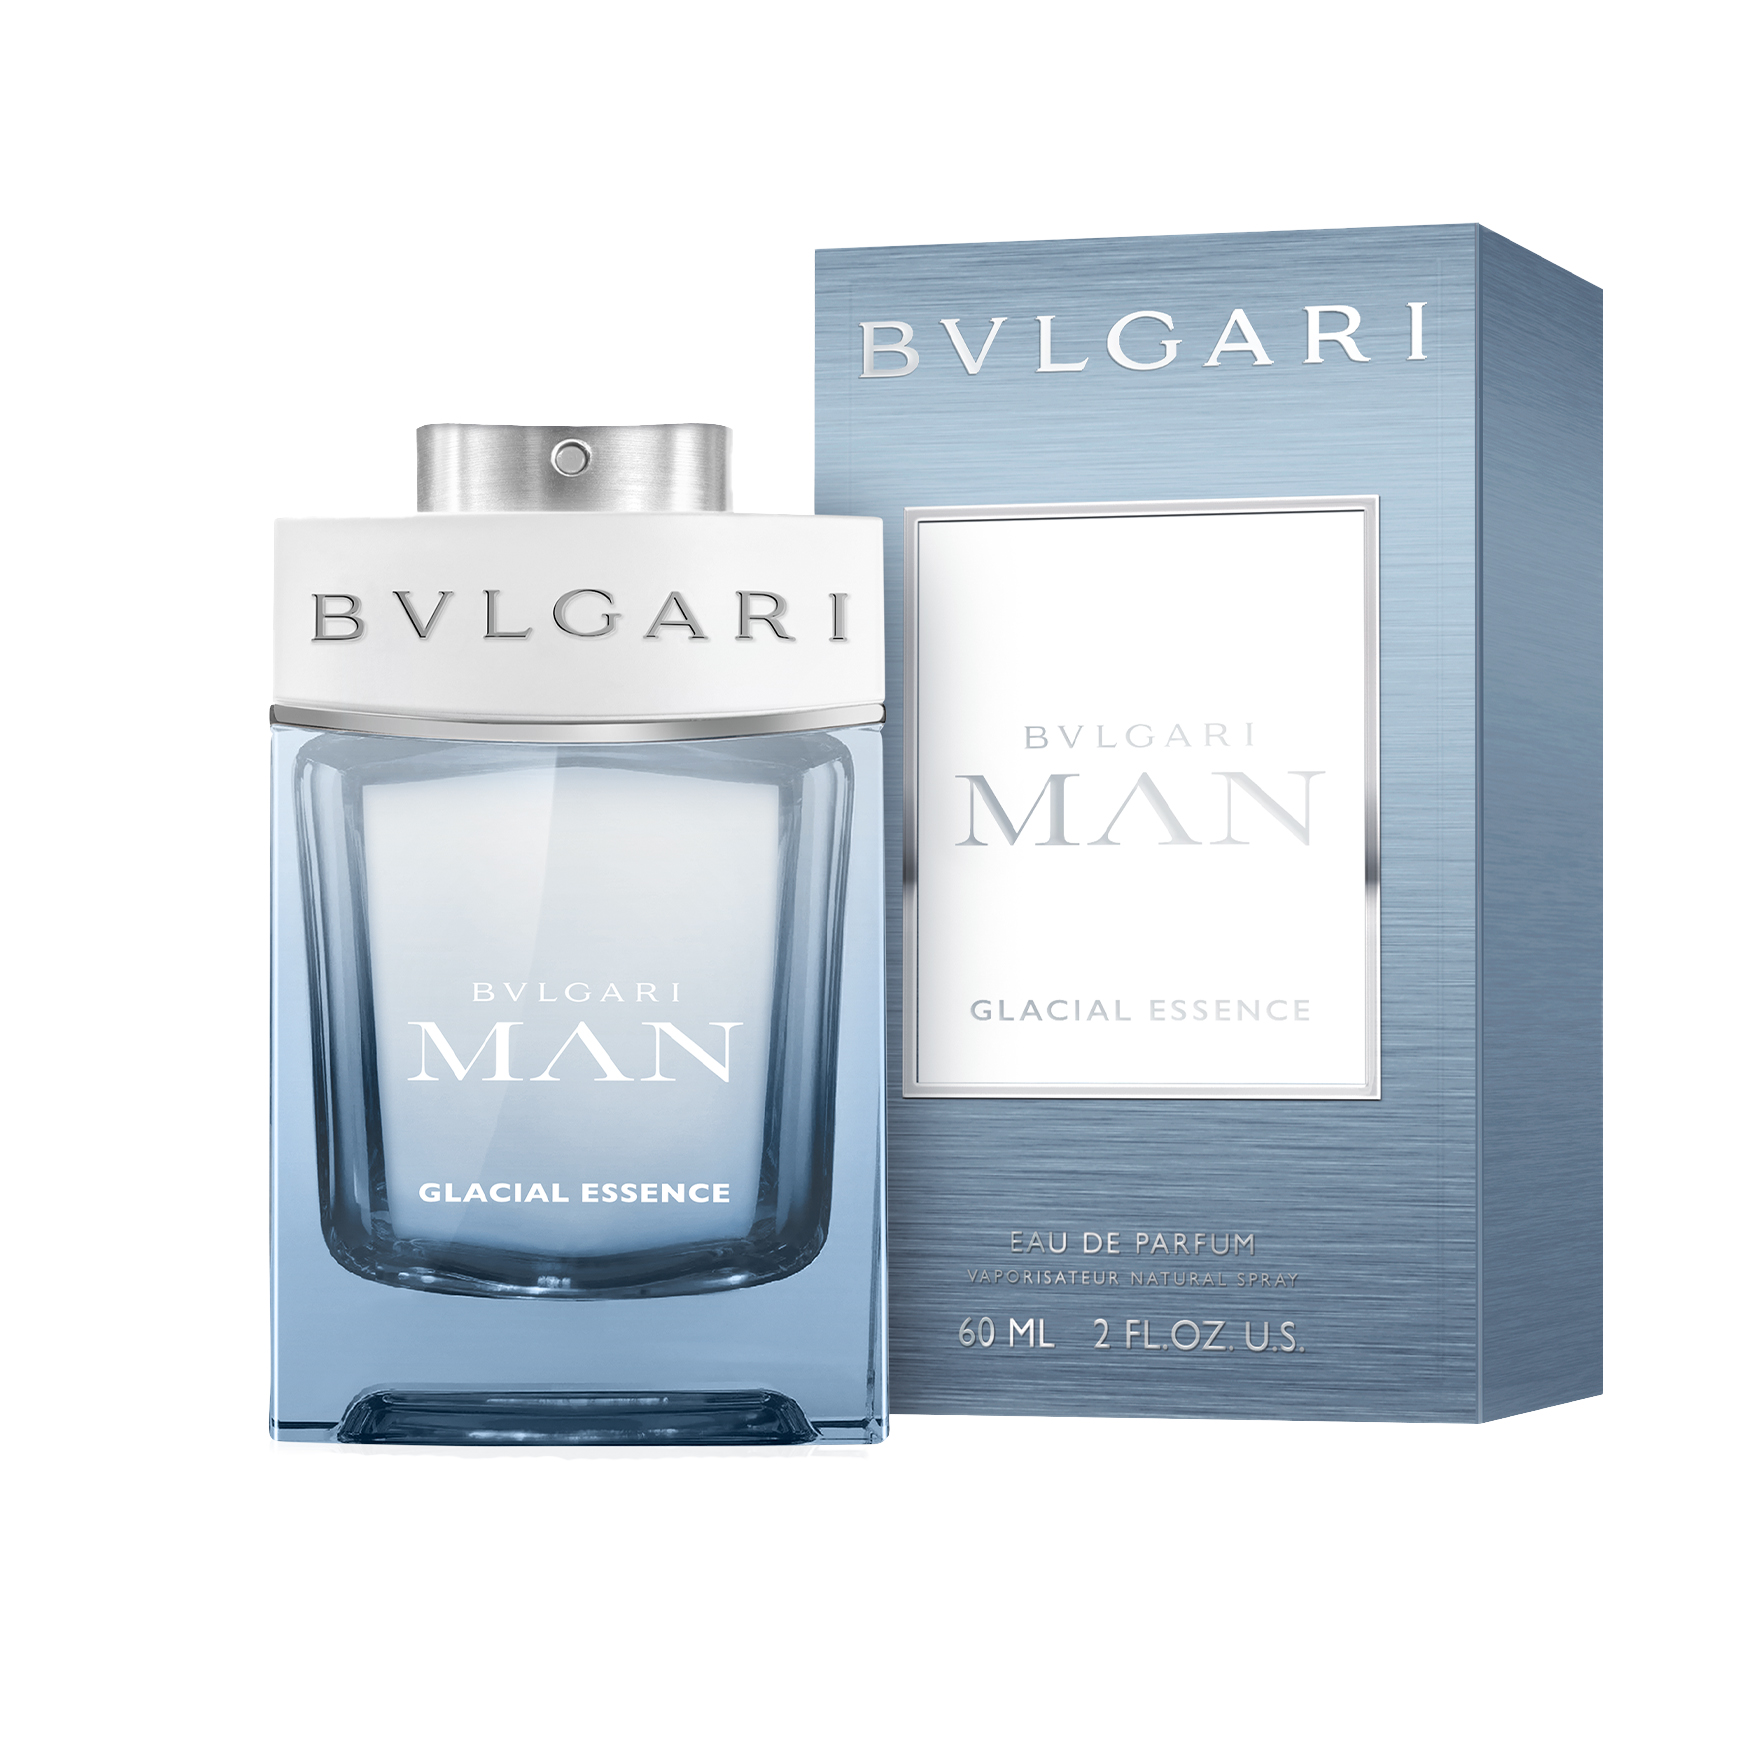 BULGARI Bvlgari Man Glacial Essence Eau de Parfum | Space NK